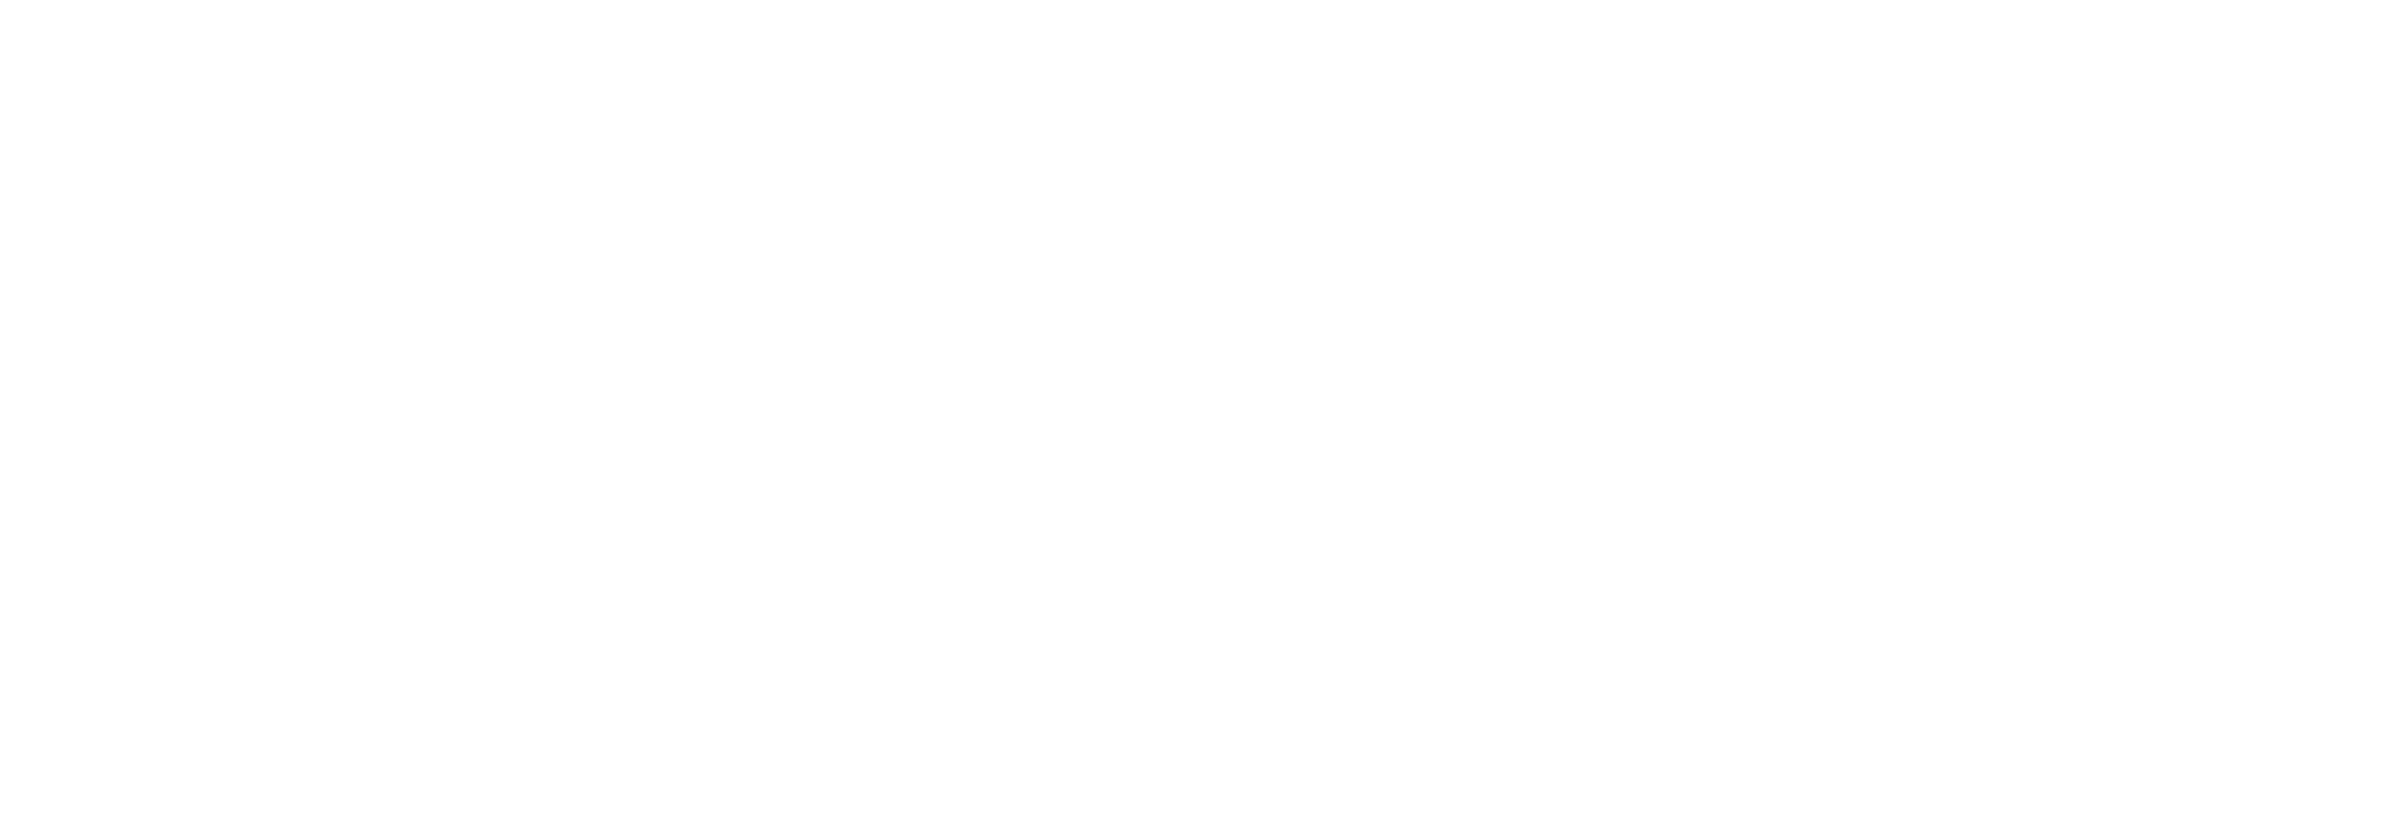 Content Traveller